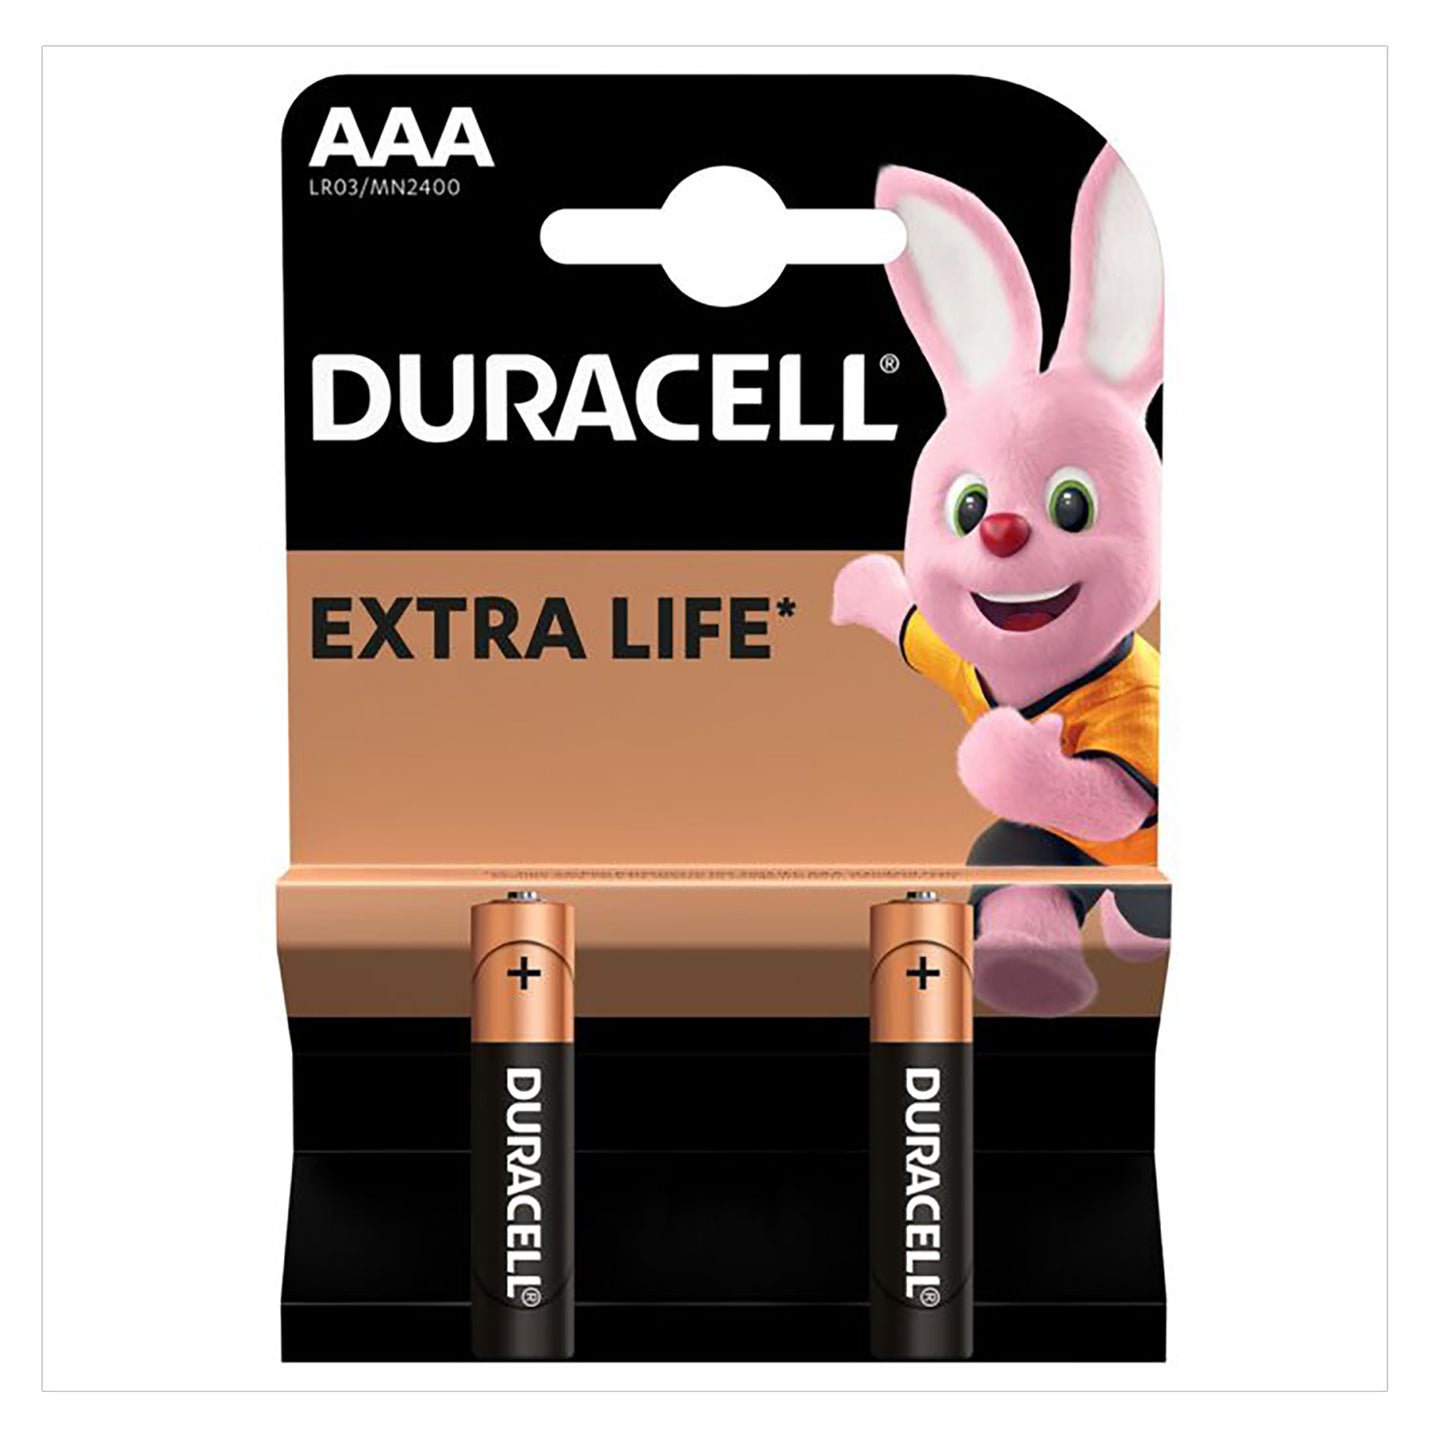 DCL-AAA-2 - щелочная батарейка Duracell AAA, аналоги: LR03, MN2400  (2 шт. в блистере)